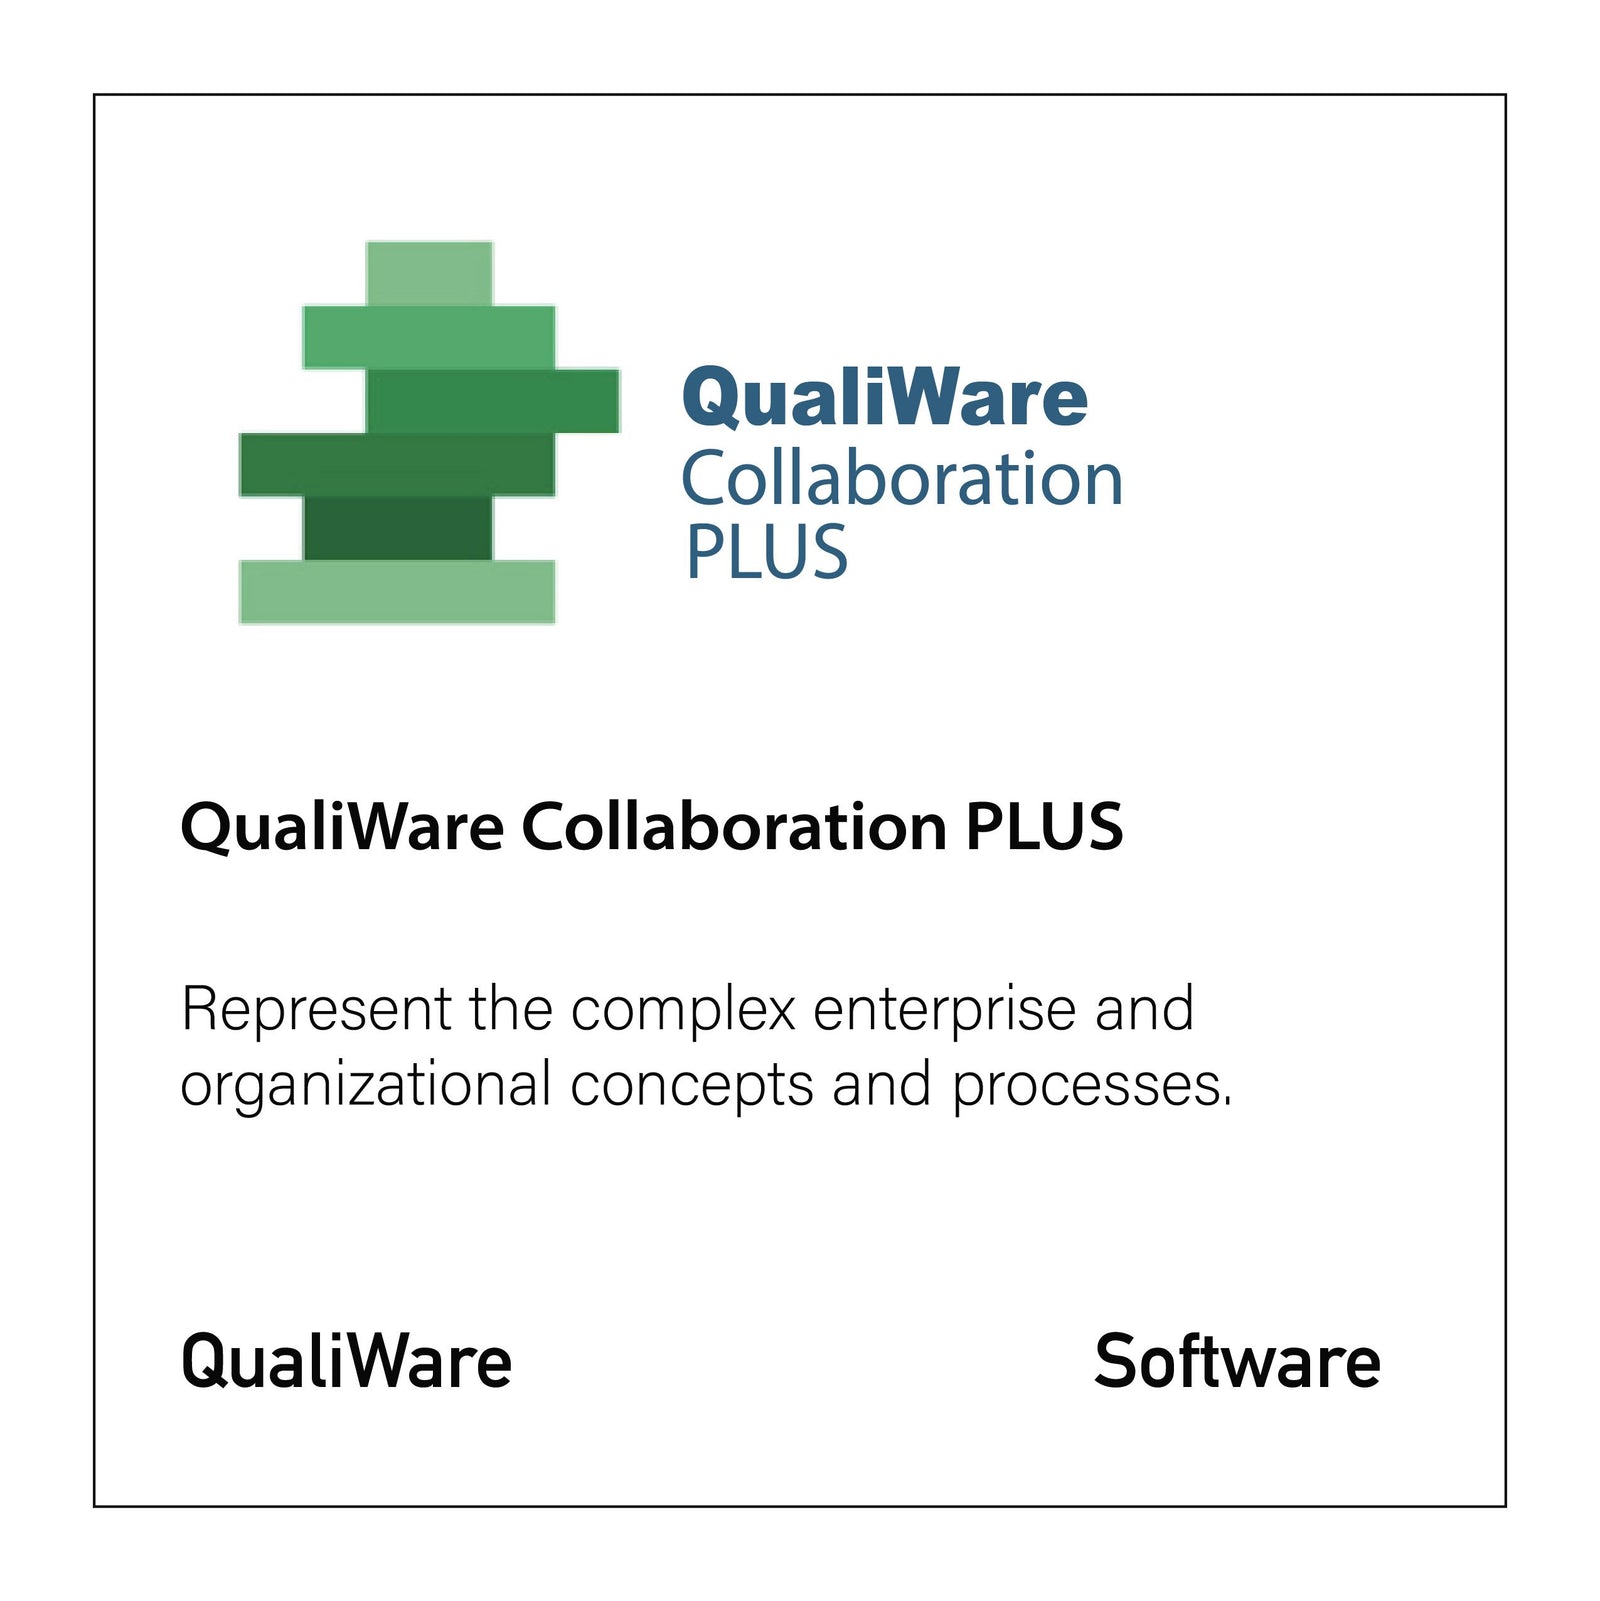 QualiWare Collaboration PLUS - CloseReach Ltd